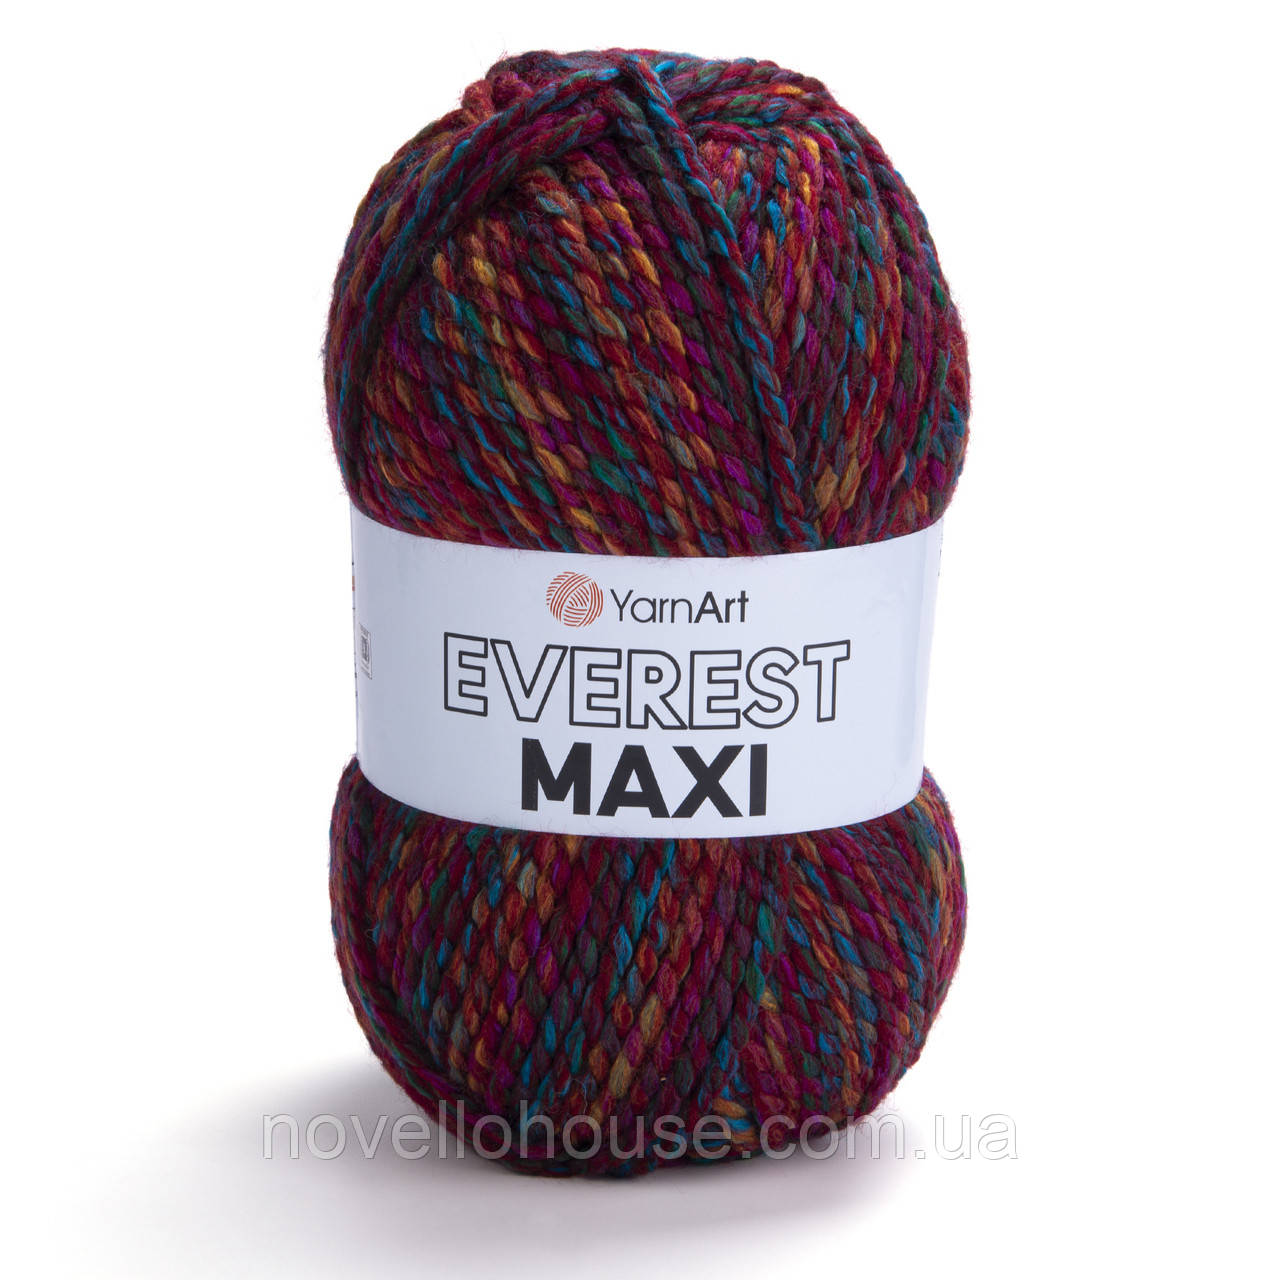 YarnArt EVEREST MAXI (Еверест Максі) № 8026 (Пряжа напіввовна, нитки для в'язання)